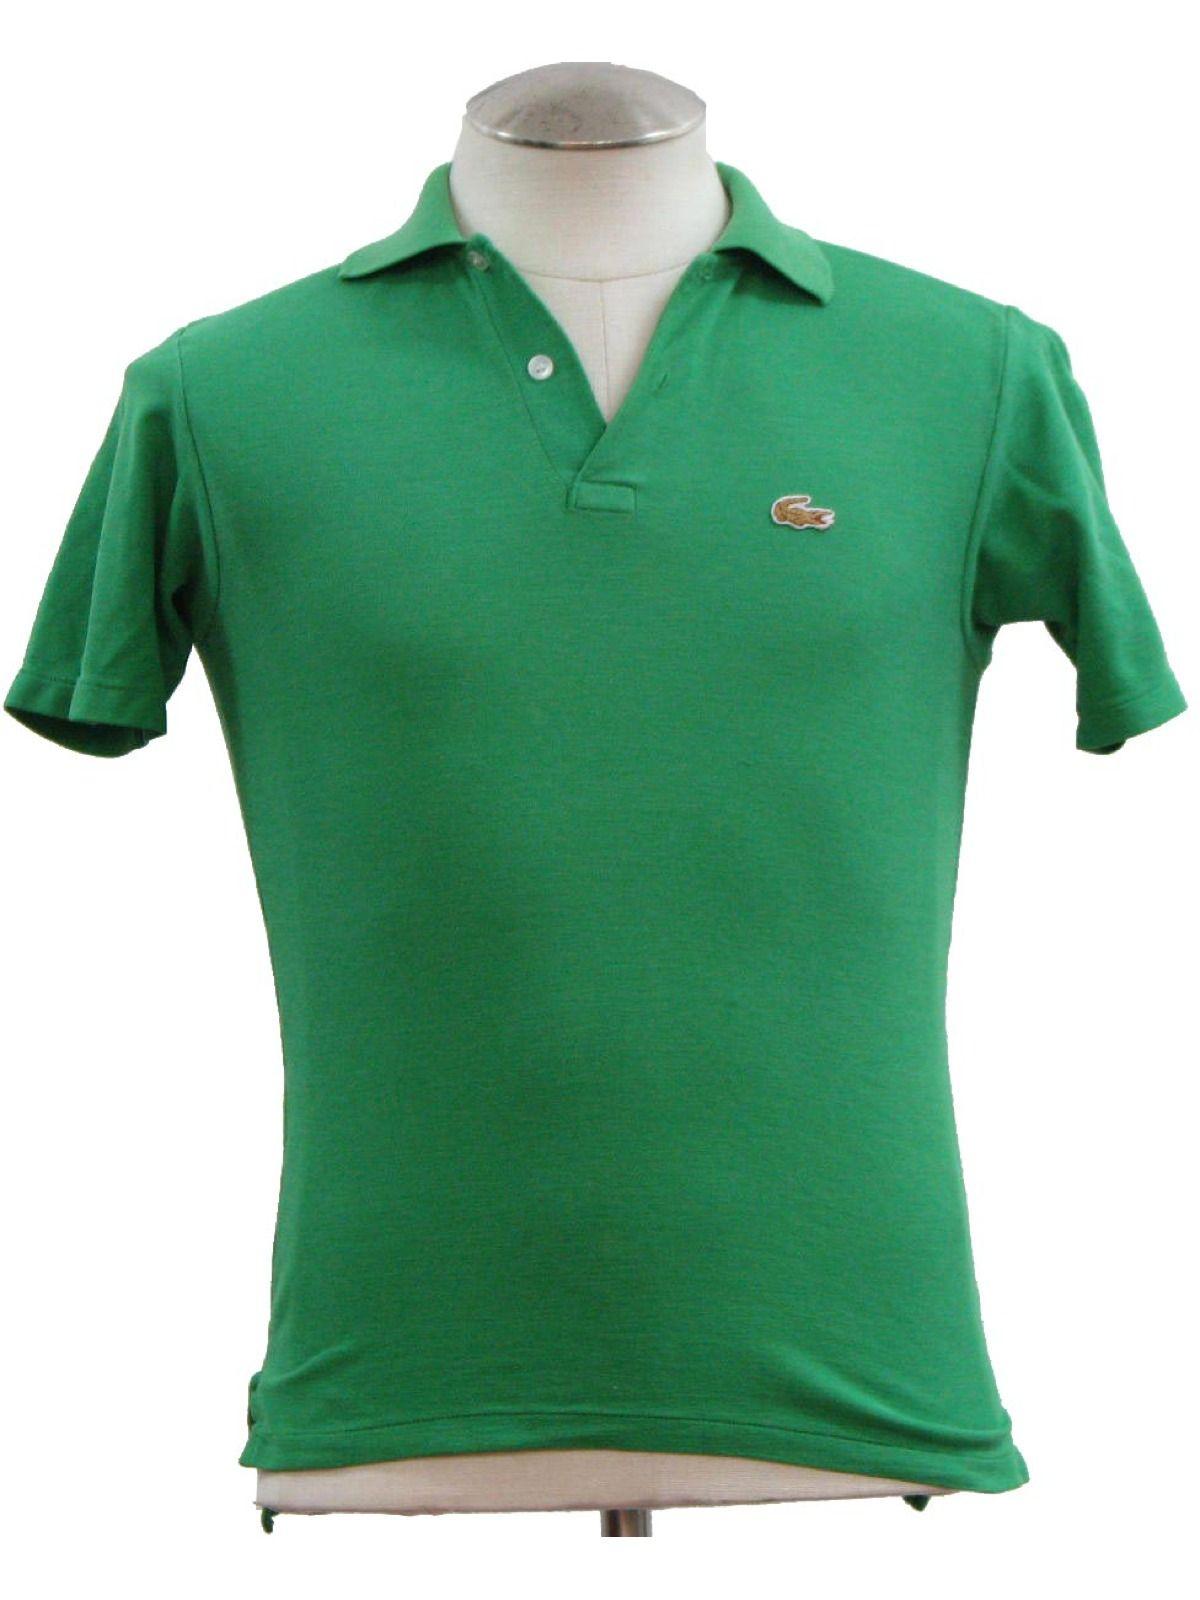 Alligator Shirt Logo - Eighties Izod Shirt: 80s -Izod- Mens or boys green woven cotton and ...